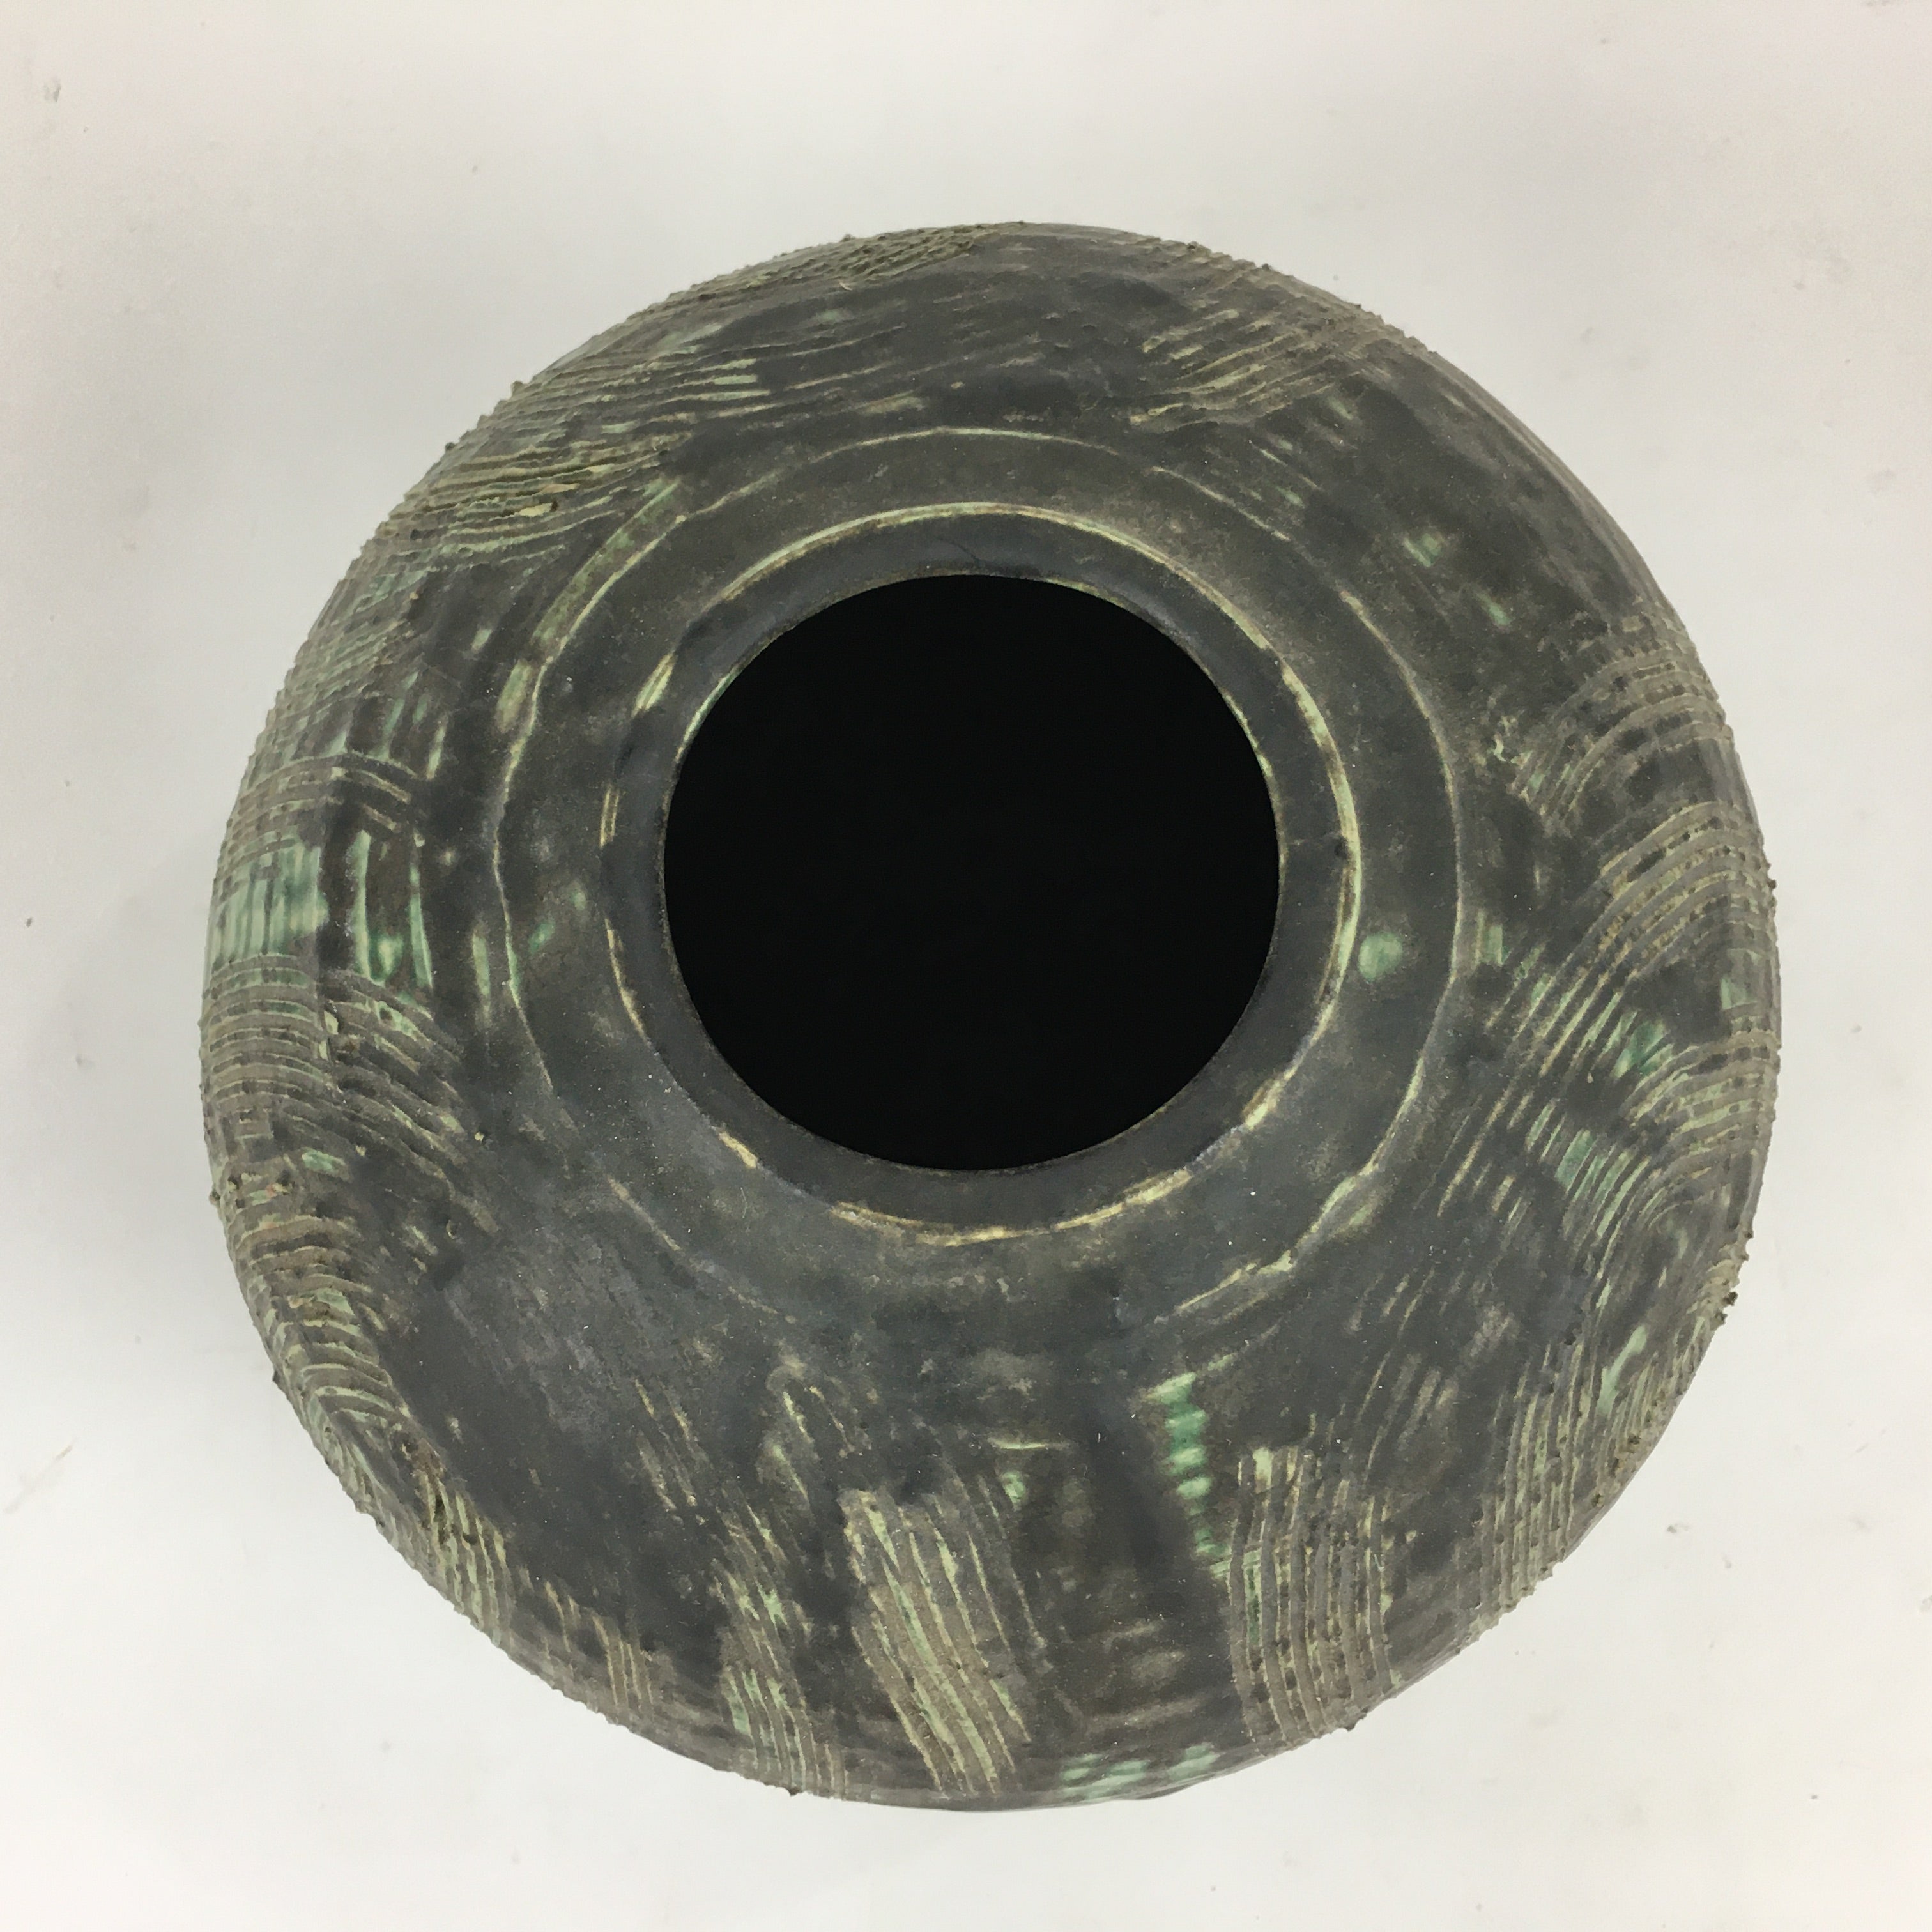 Japanese Ceramic Flower Vase Round Black Green Kabin Ikebana Arrangement FV967